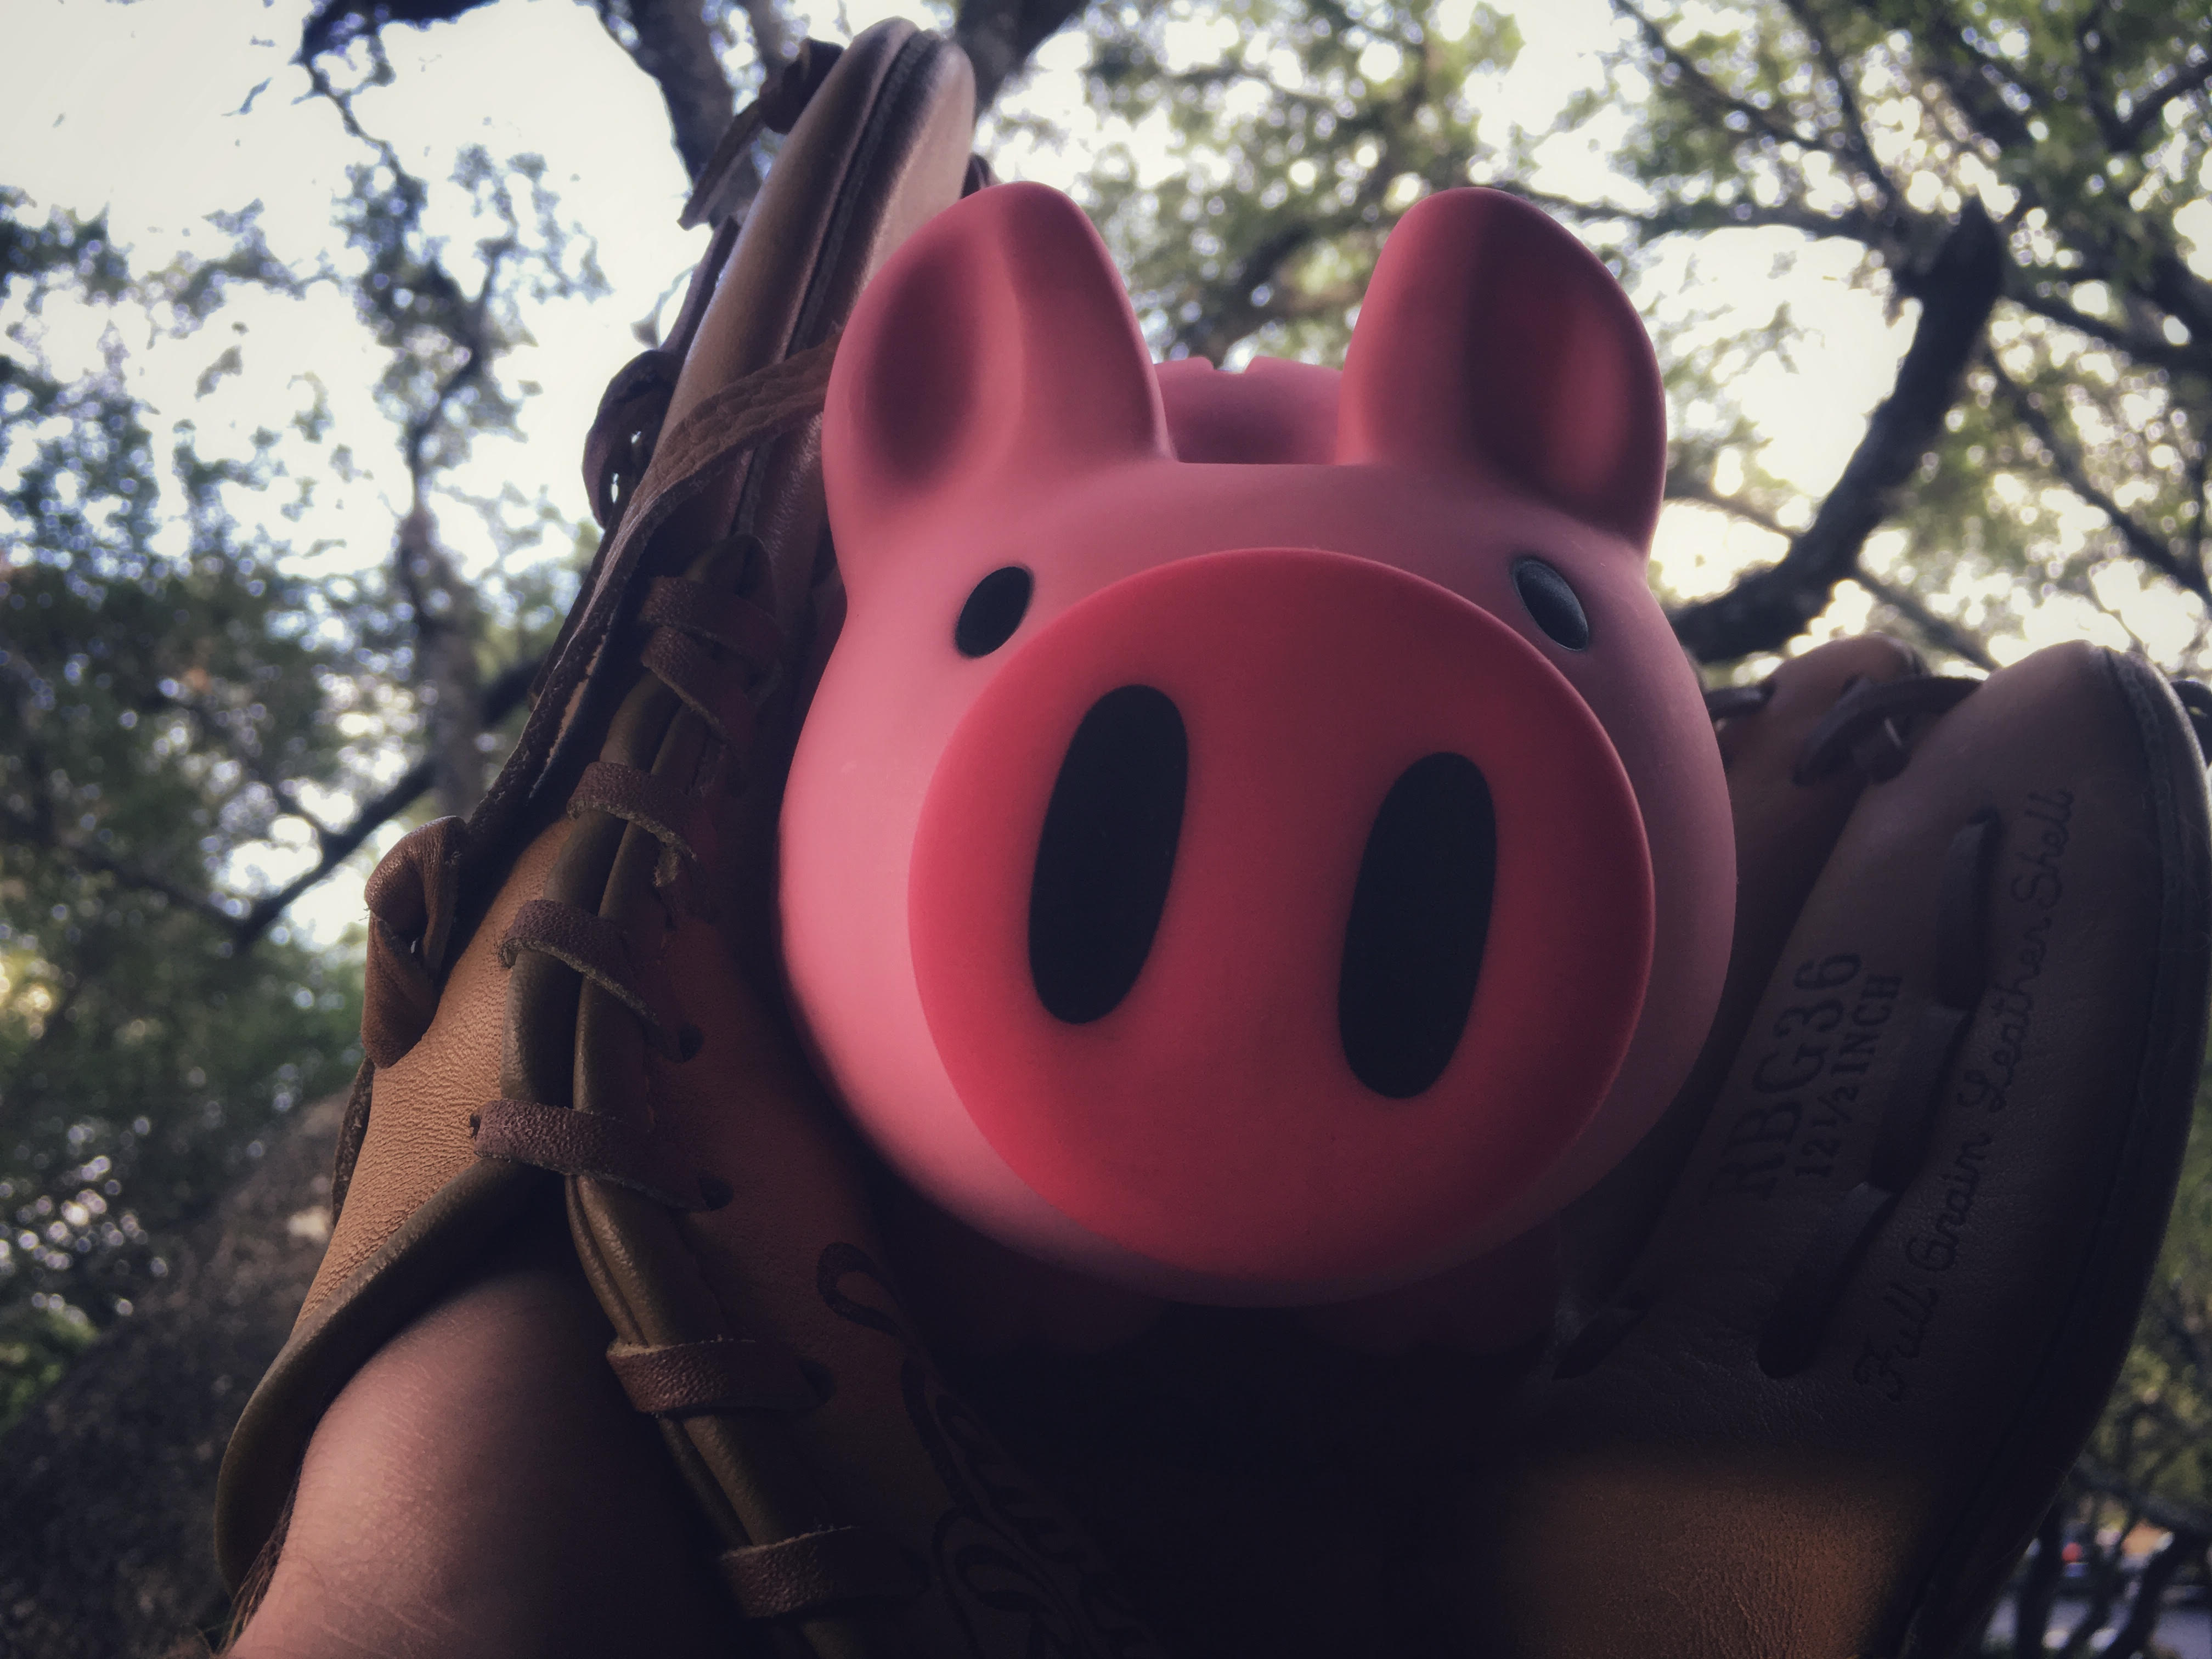 The Z5 piggy bank gets caught in a baseball glove.